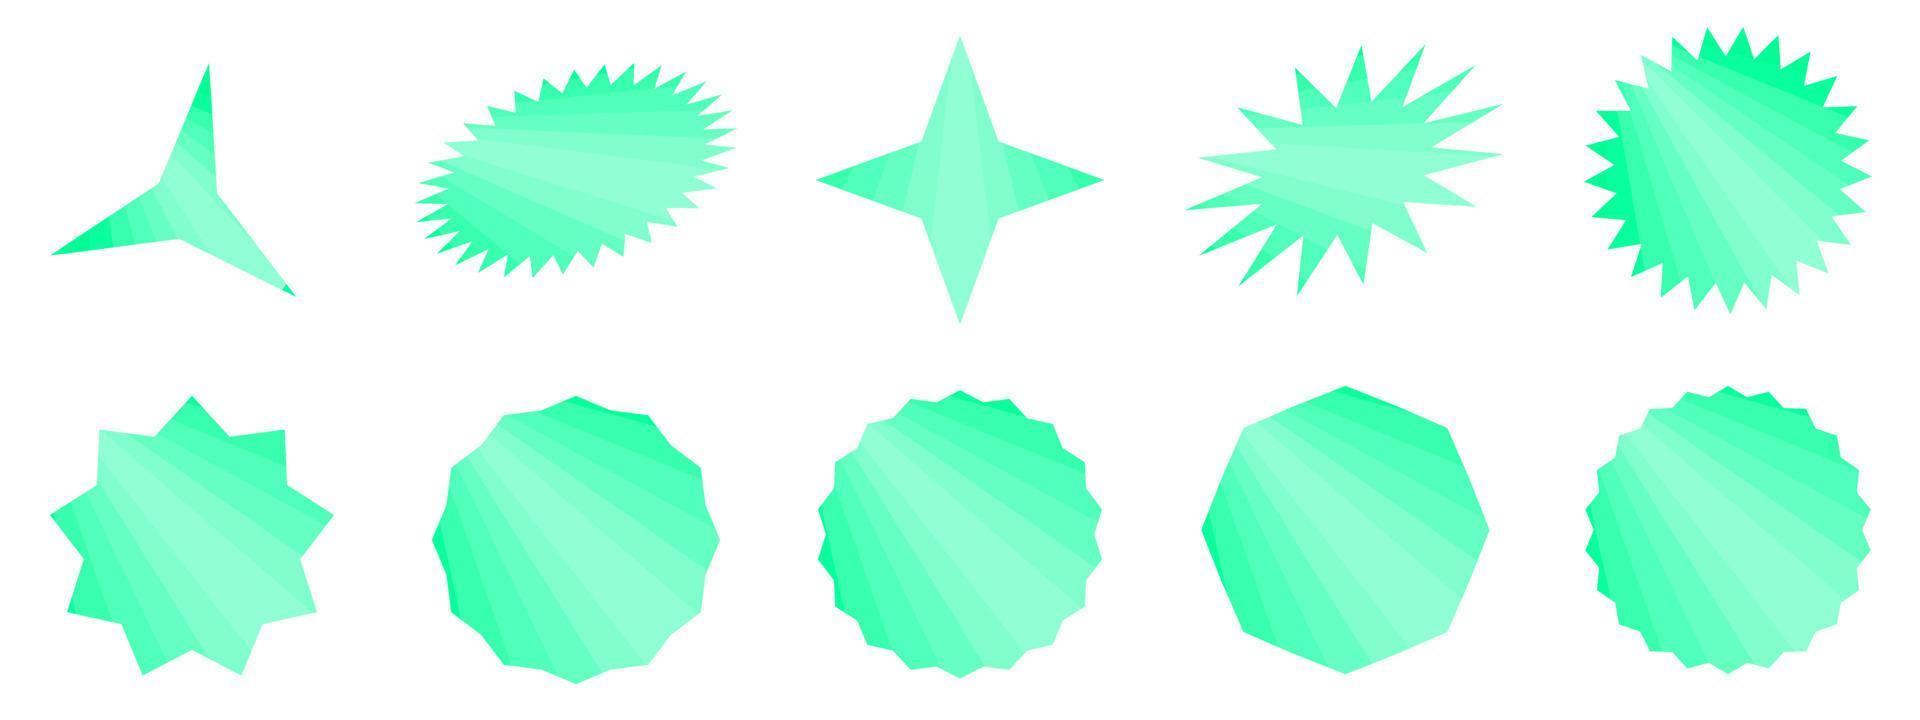 Set of green starburst, abstract background texture pattern vector illustration